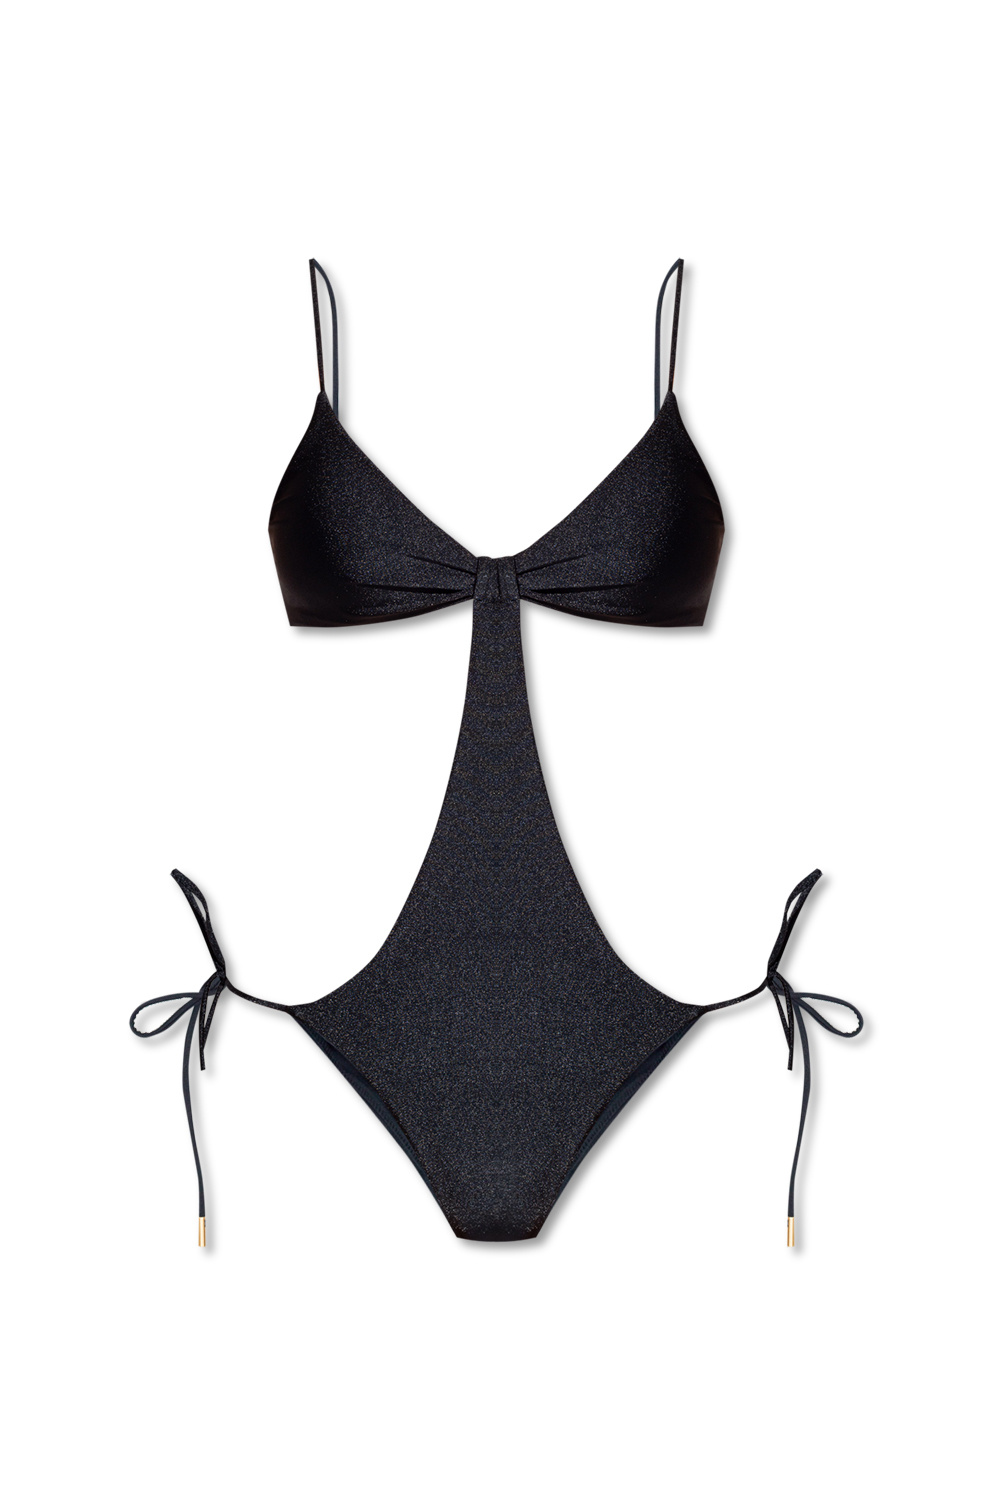 Cult Gaia ‘Teo’ one-piece swimsuit | Women's Clothing | Vitkac